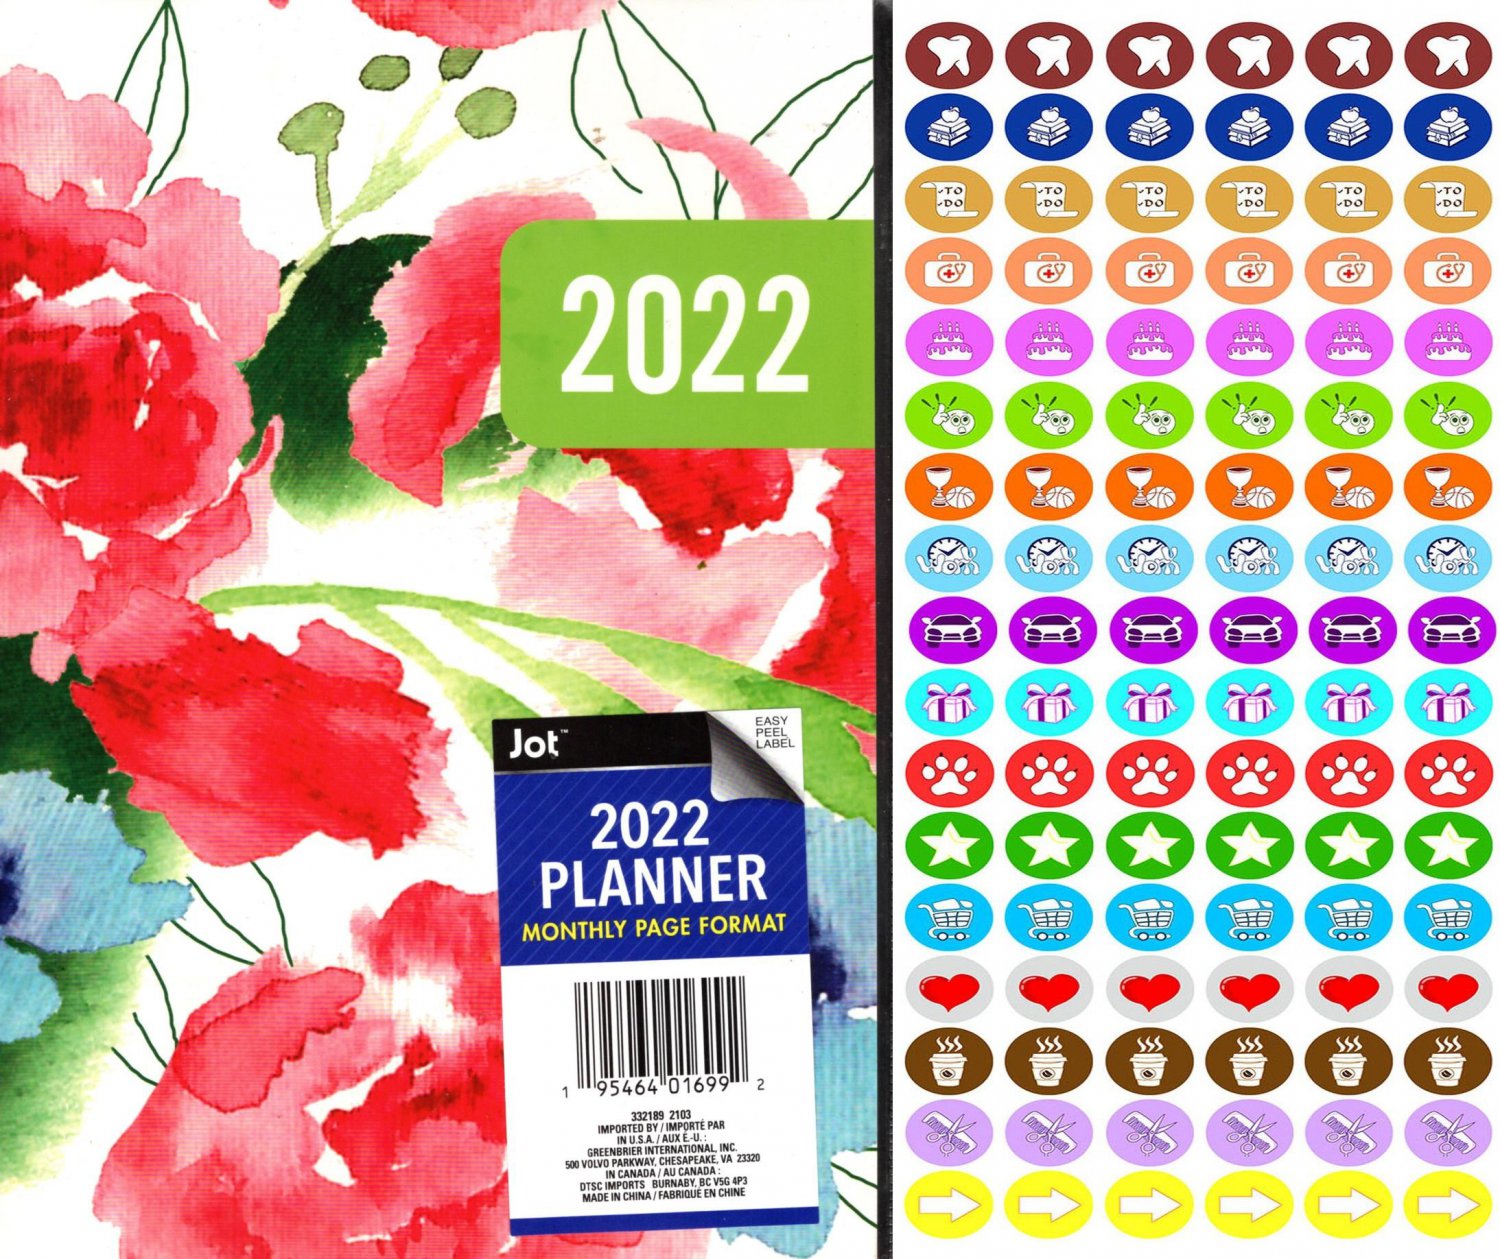 2022 Planner Calendar - School College Monthly Agenda - Appointment Book Organizer + 100 Stickers v3